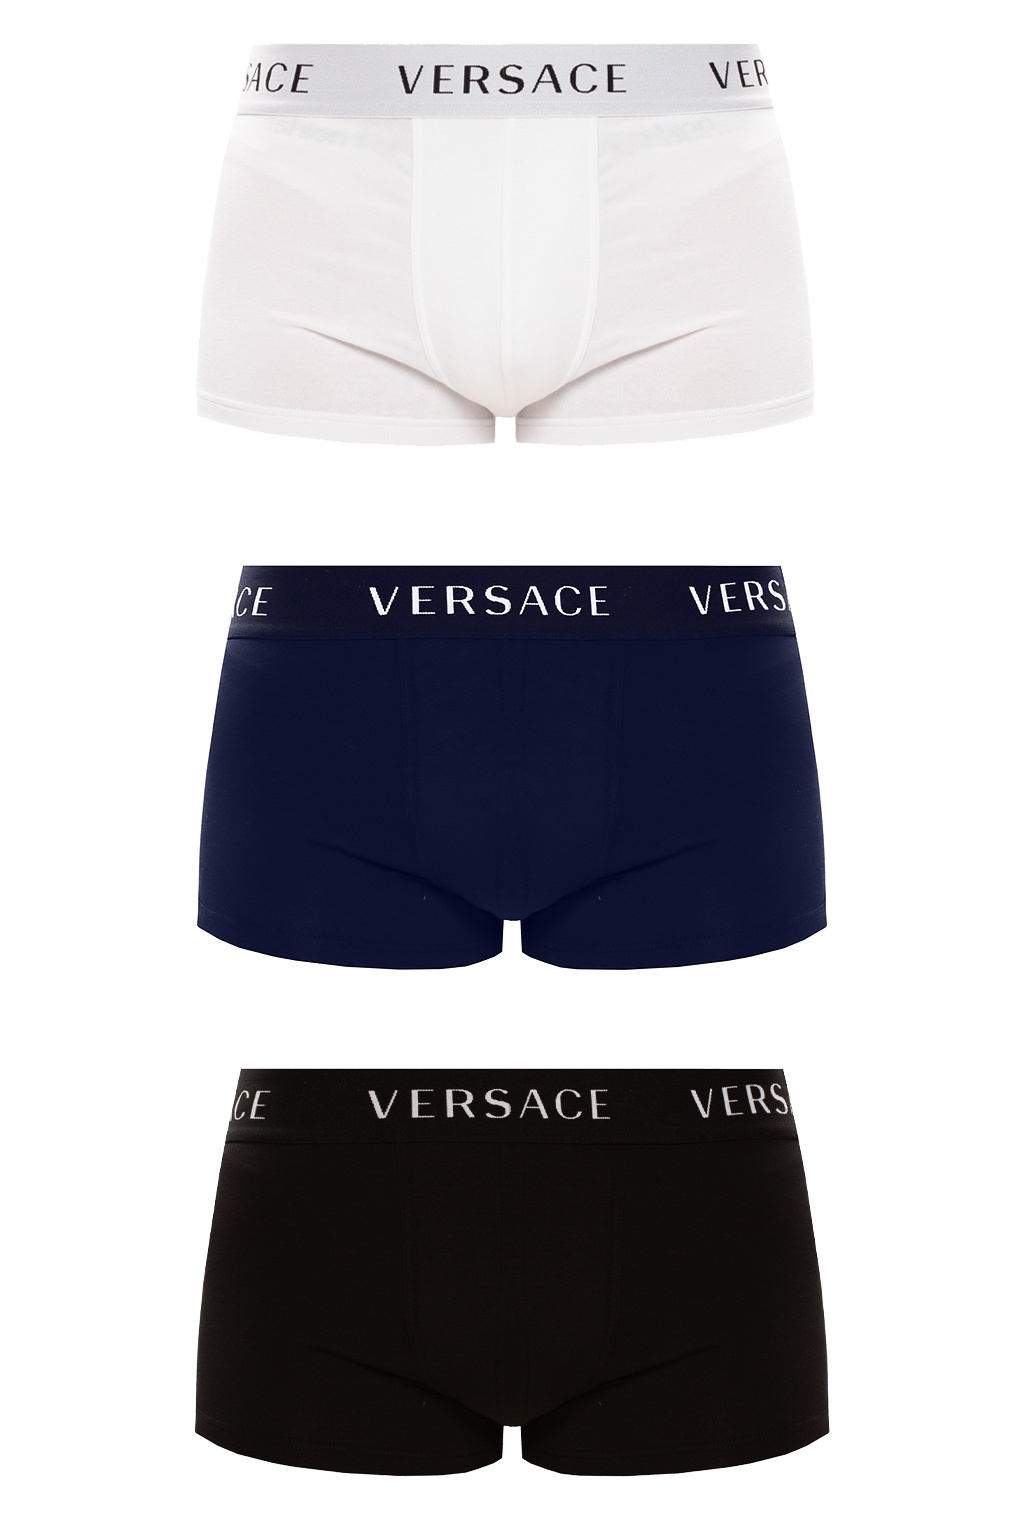 versace boxers 3 pack